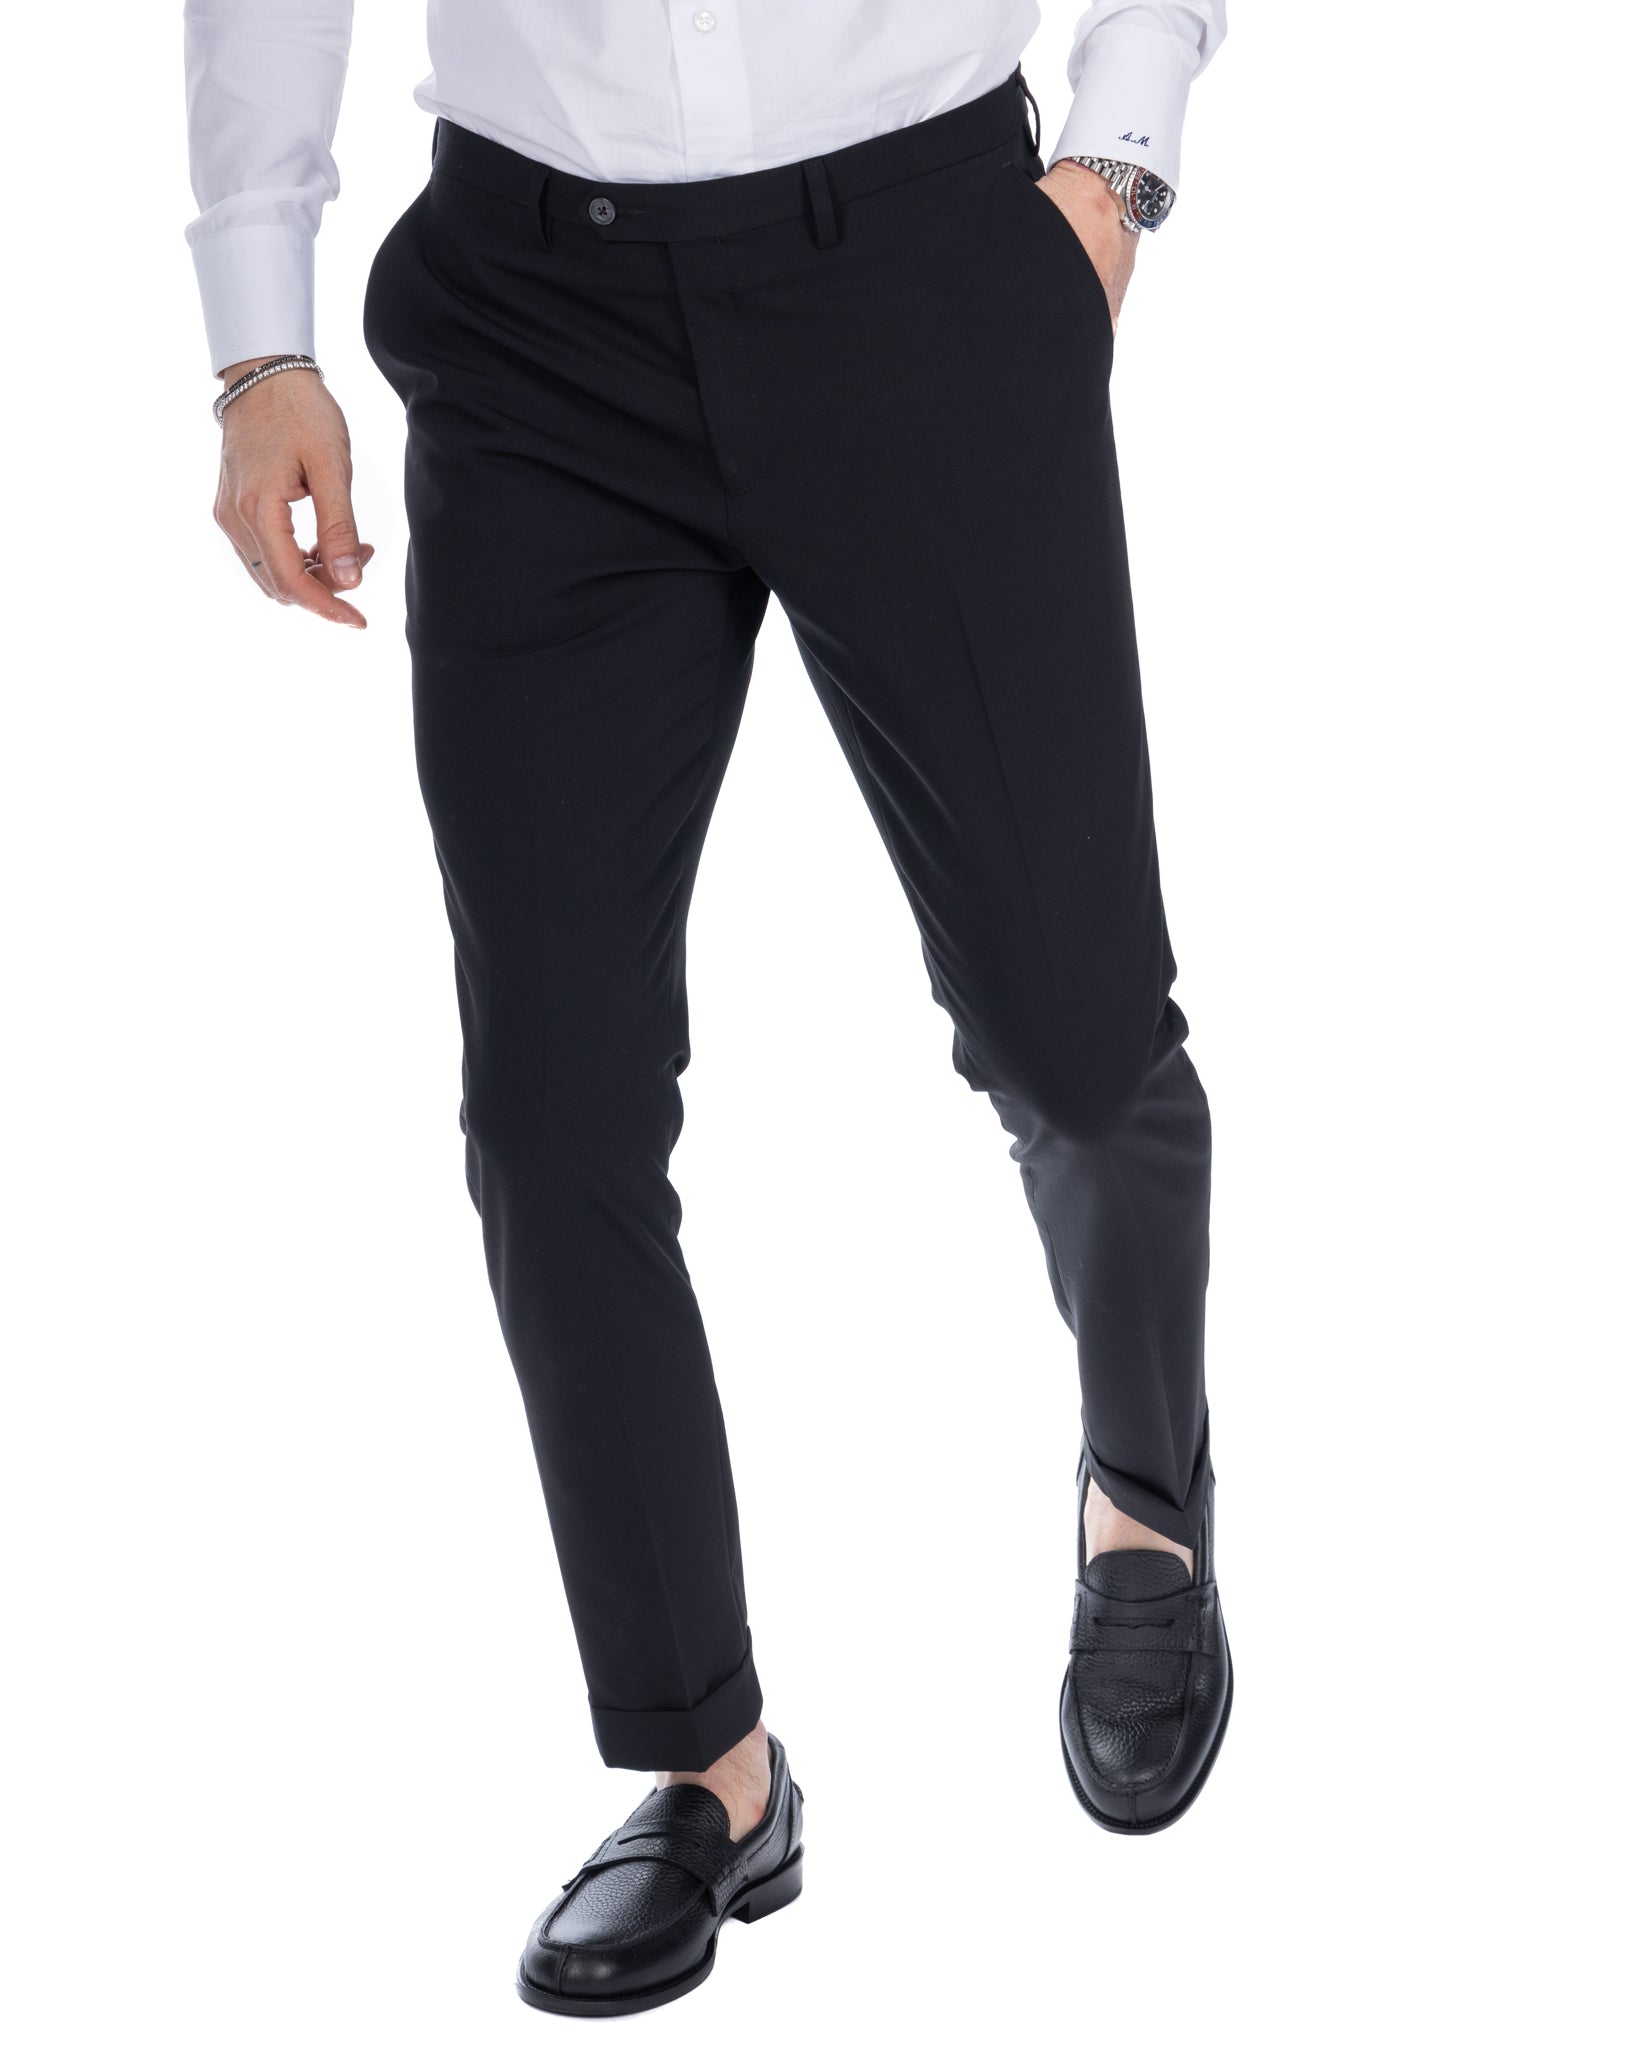 Brema - black basic trousers